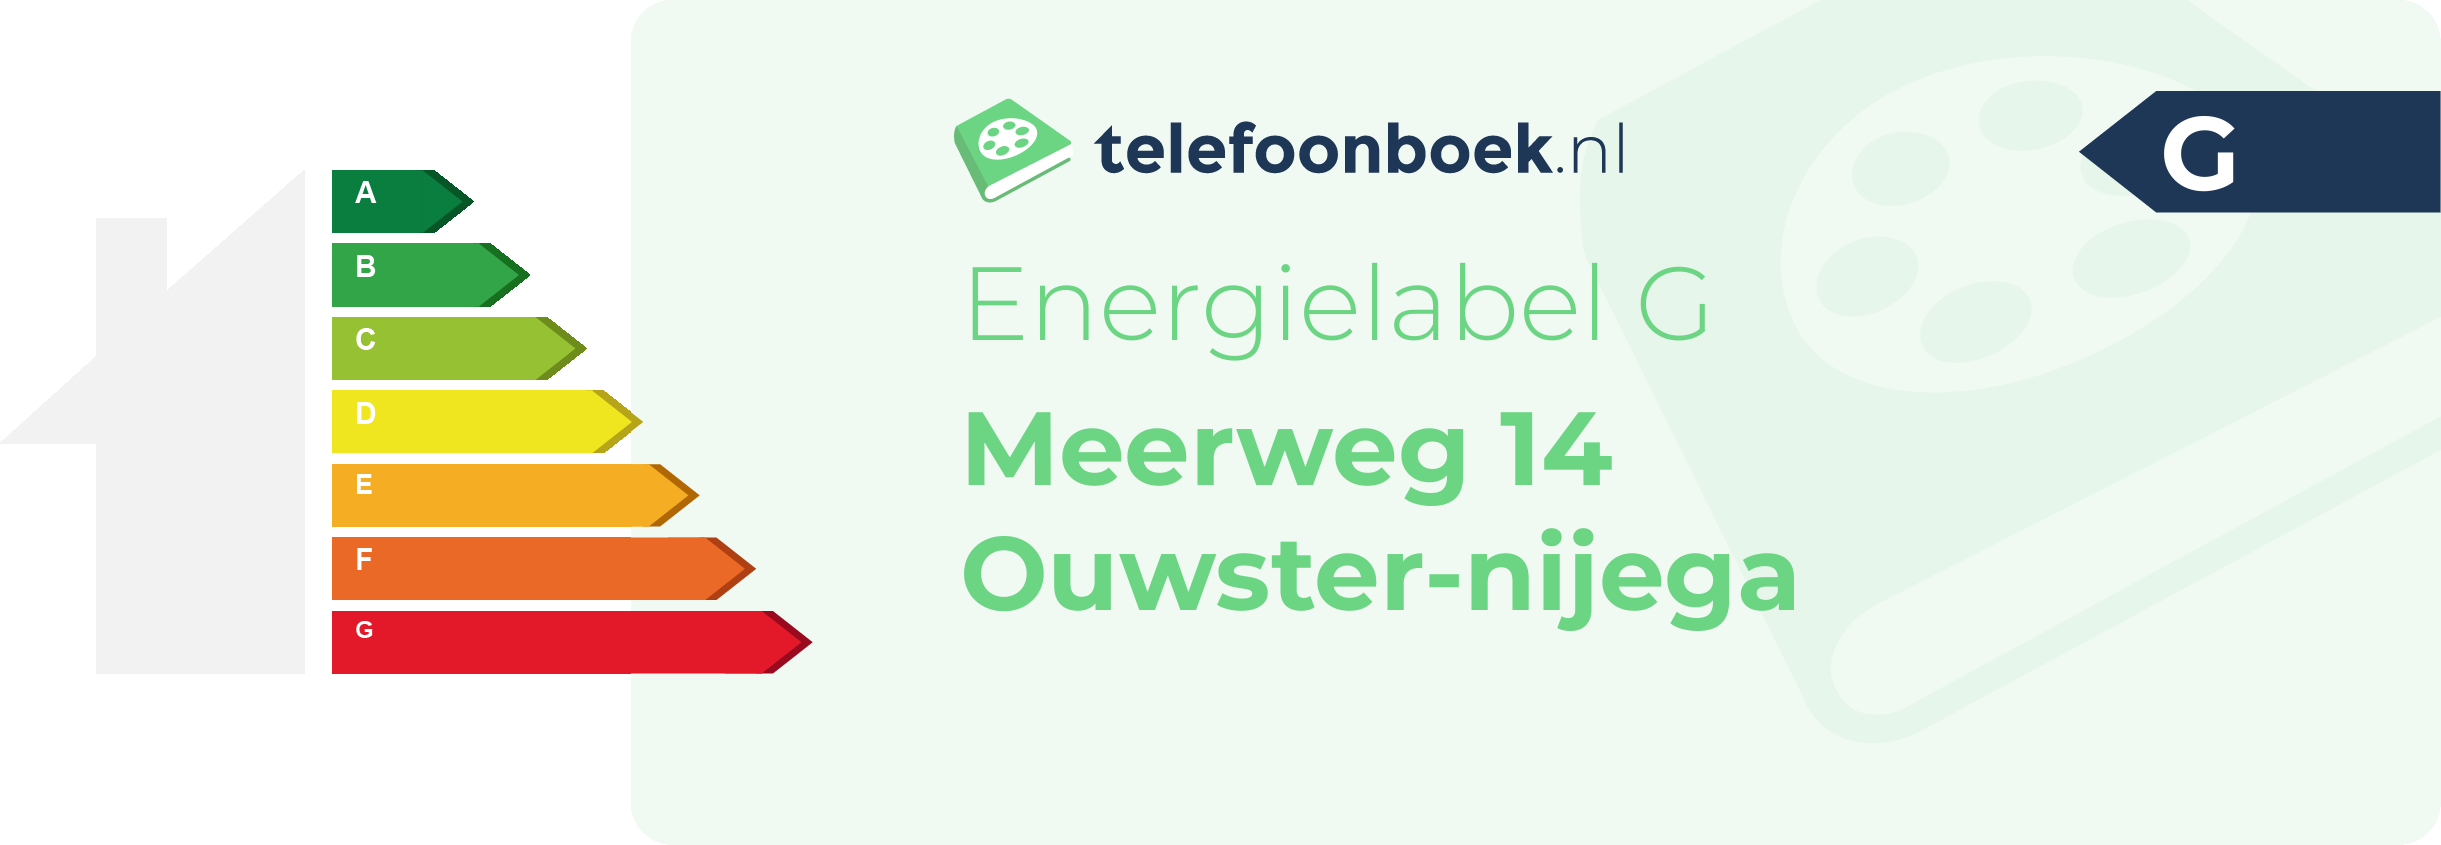 Energielabel Meerweg 14 Ouwster-Nijega